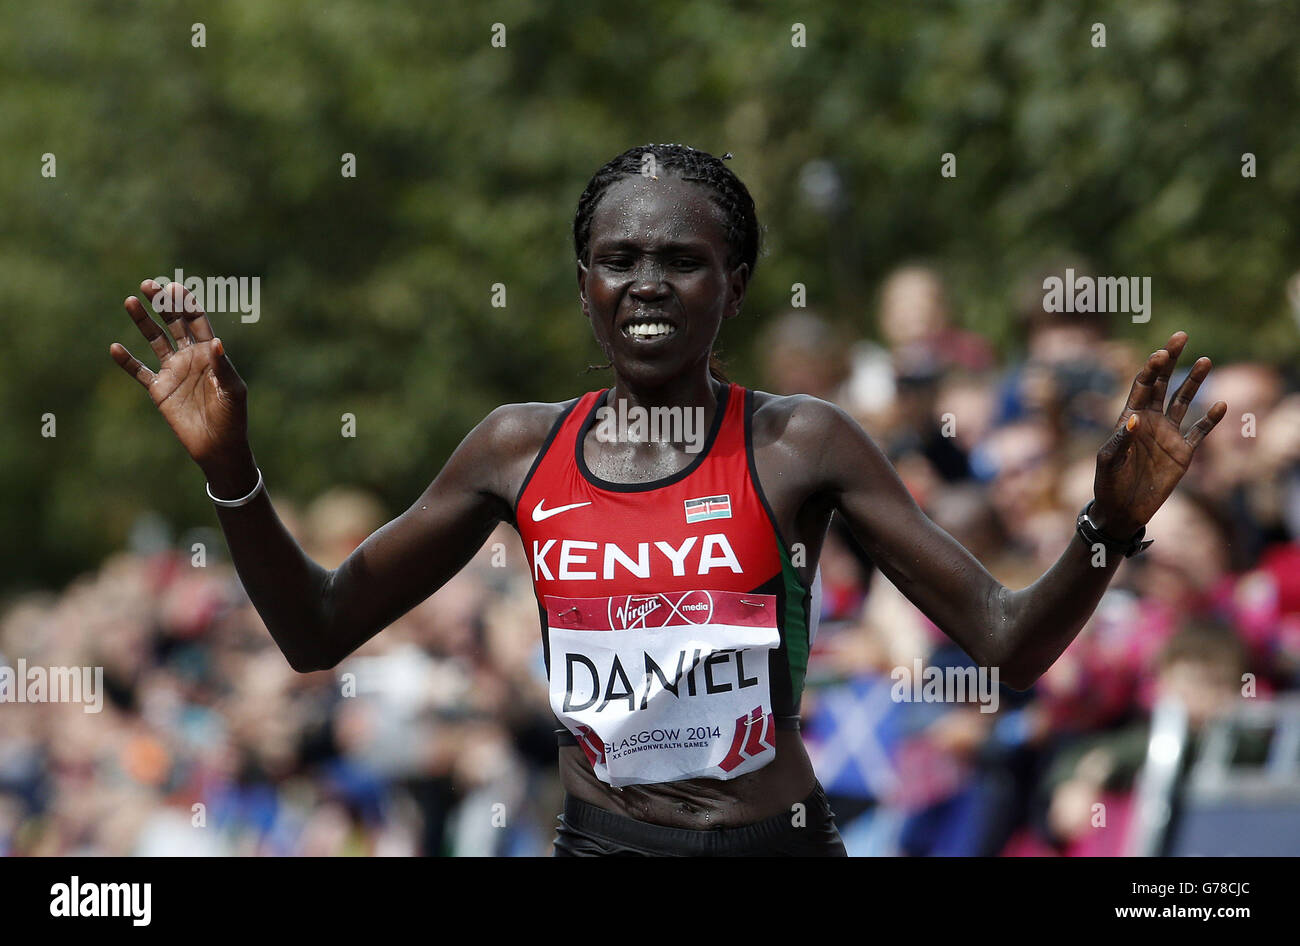 Sport - 2014 Commonwealth Games - Day Four. Kenya's Flomena Cheyech Daniel celebrates winning the women's marathon during the 2014 Commonwealth Games in Glasgow. Stock Photo